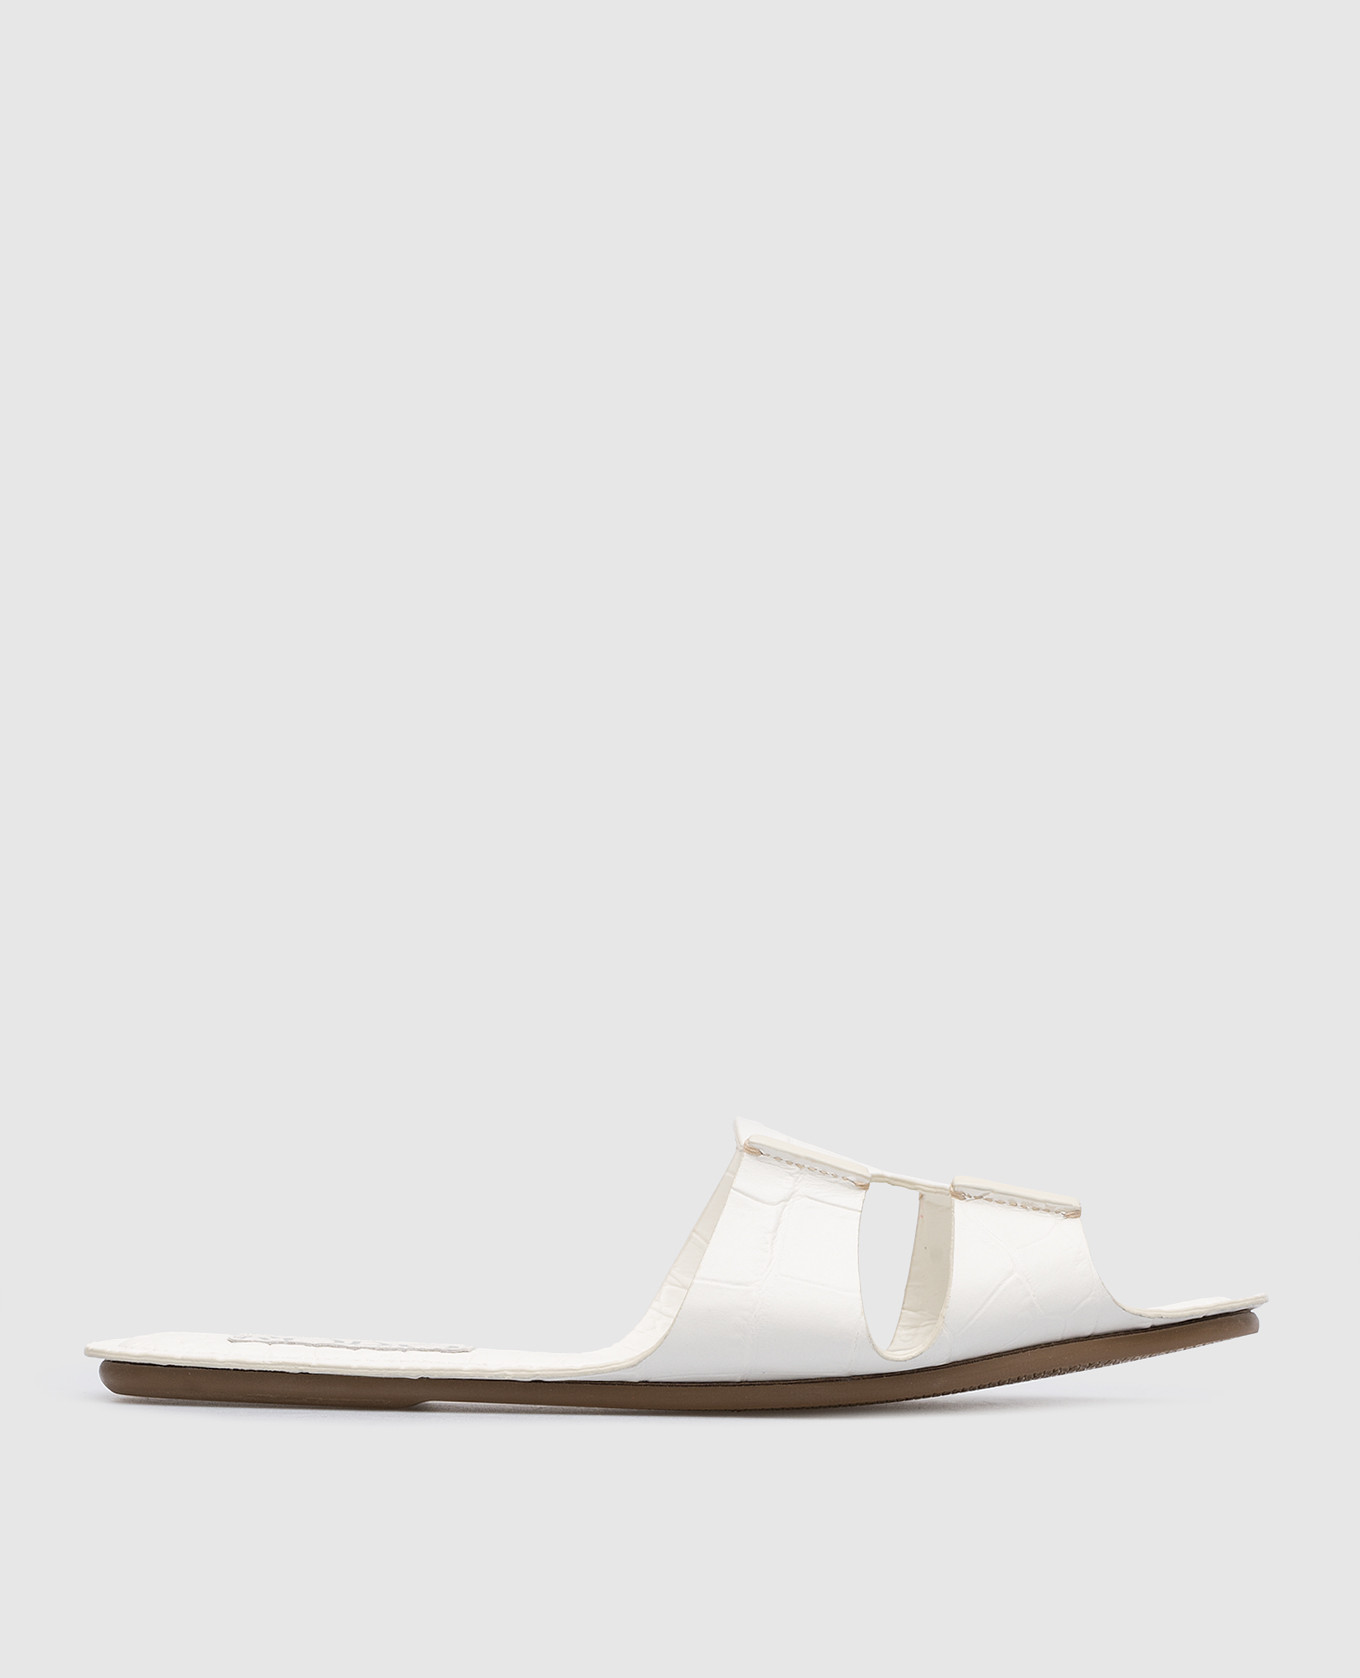 White leather flip flops